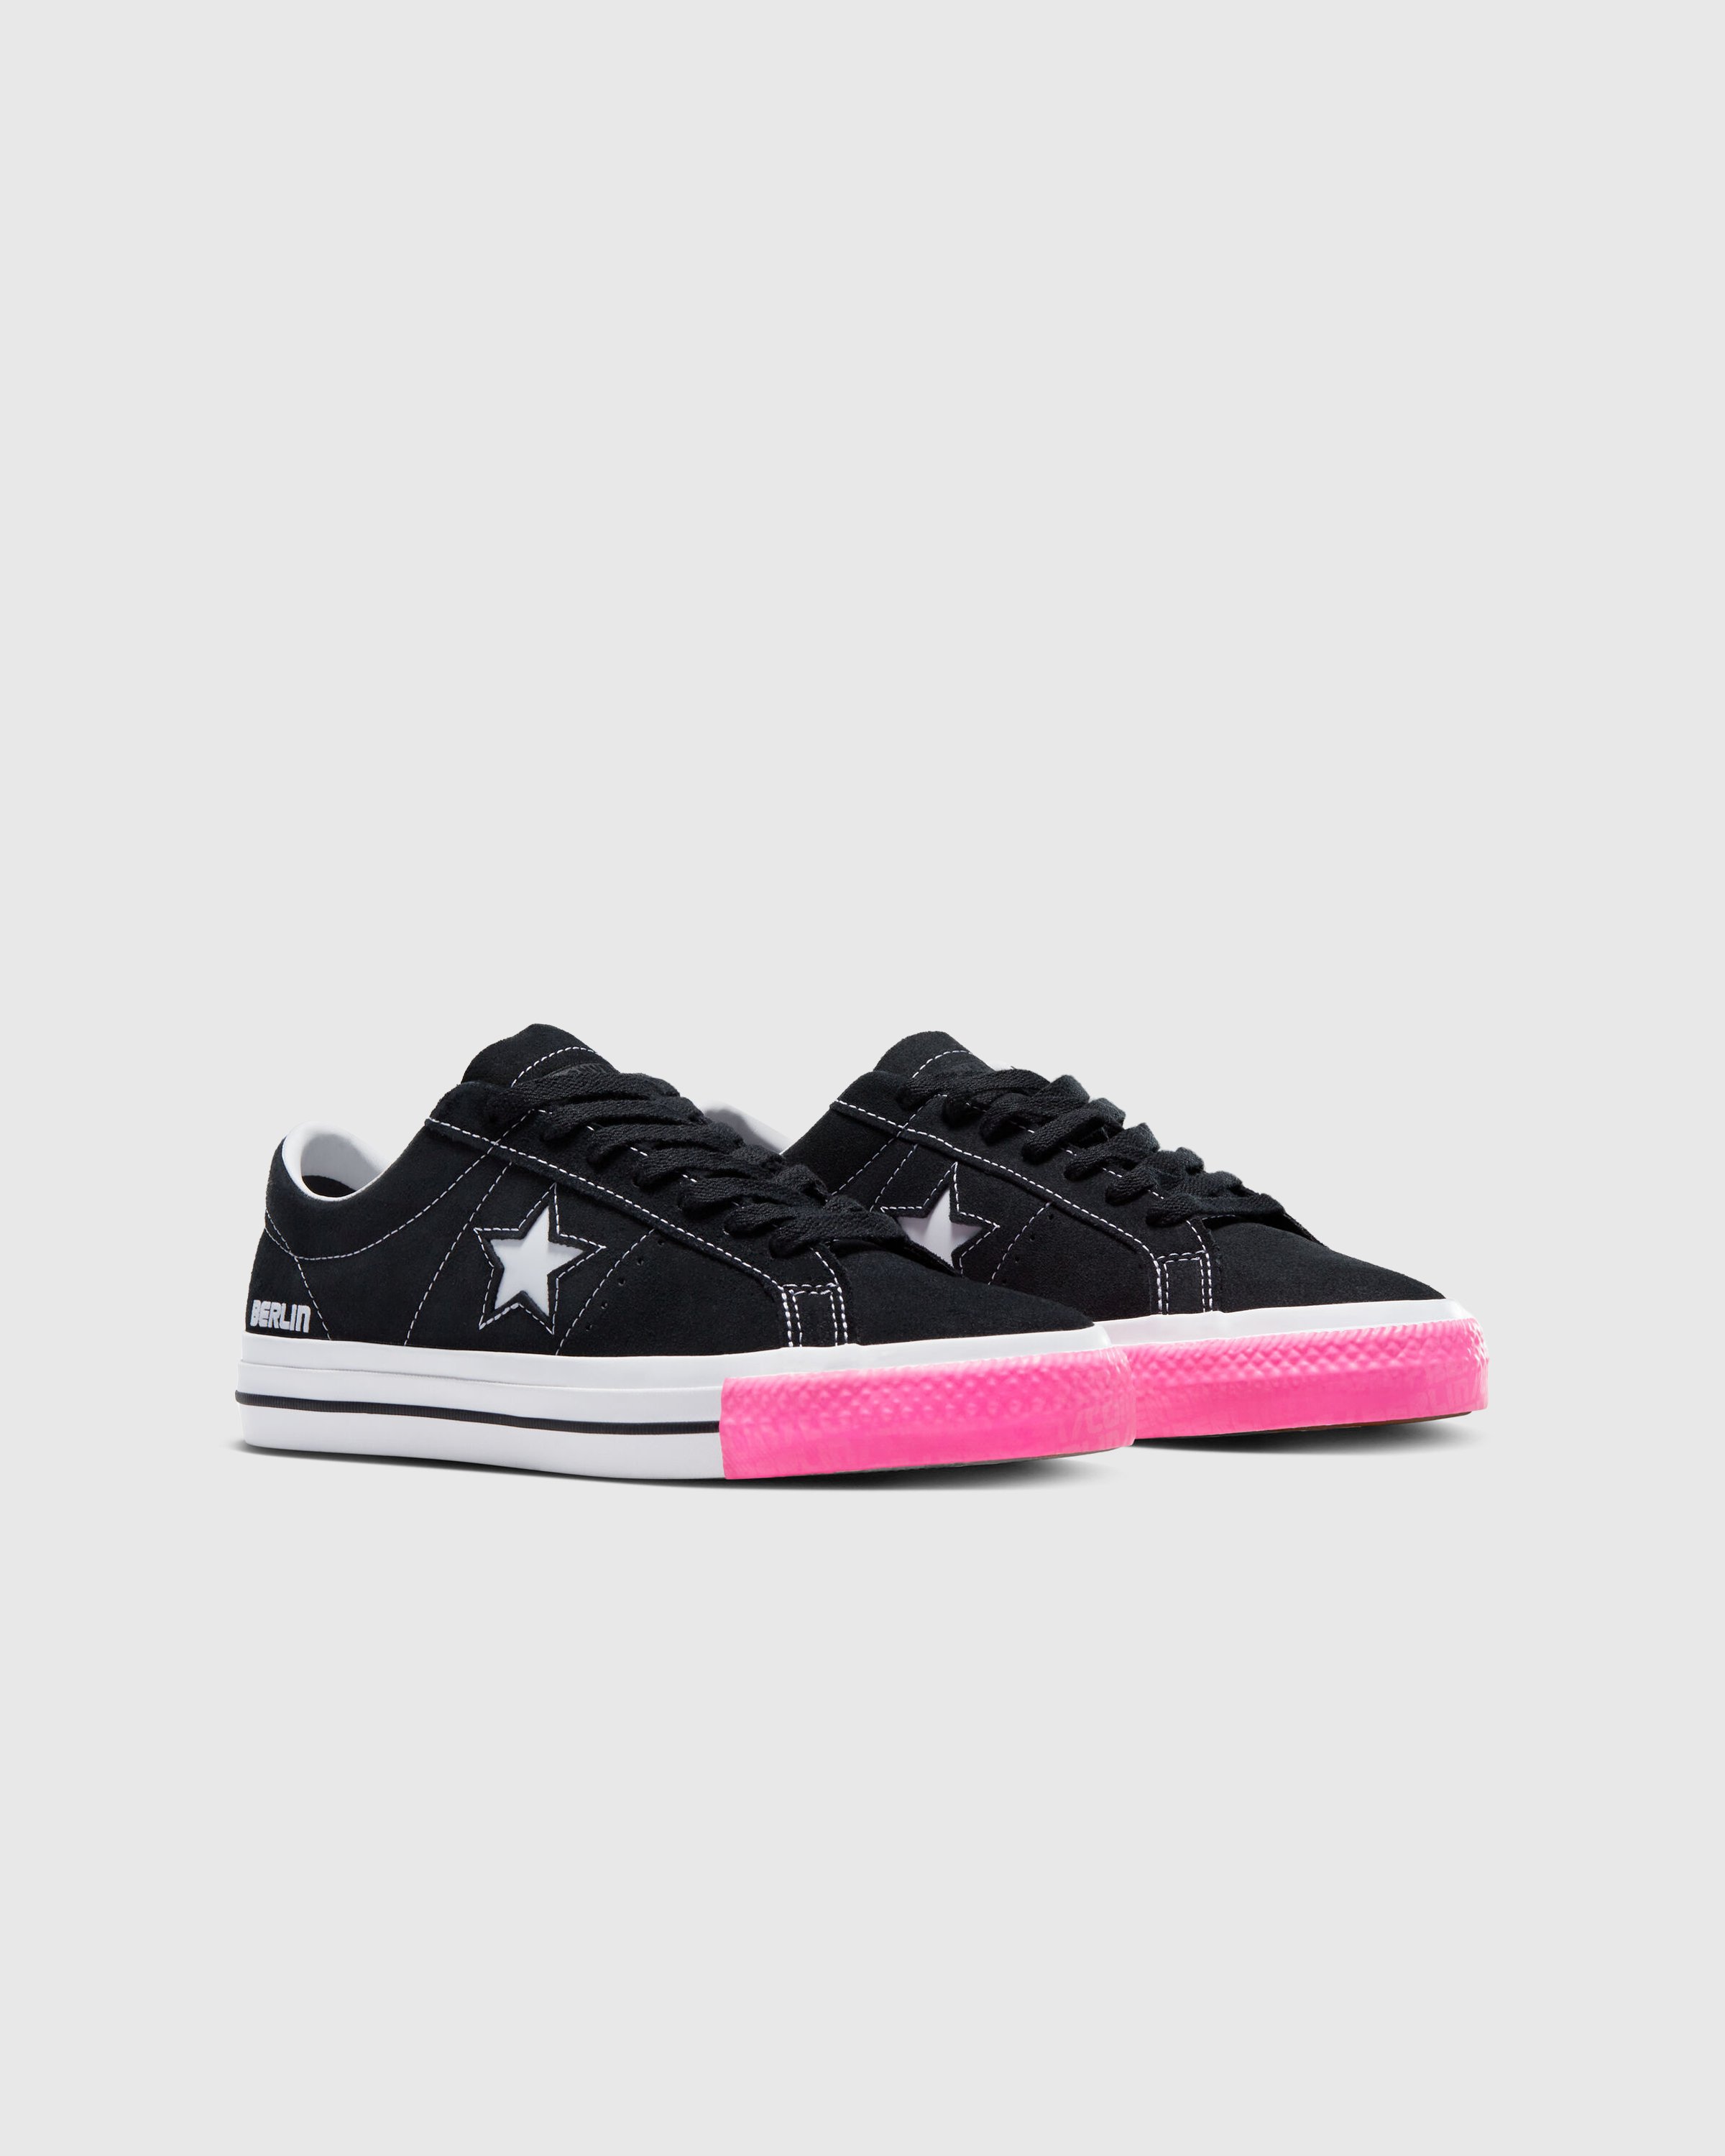 Converse - One Star Pro Berlin Black/Pink - Footwear - Black - Image 3